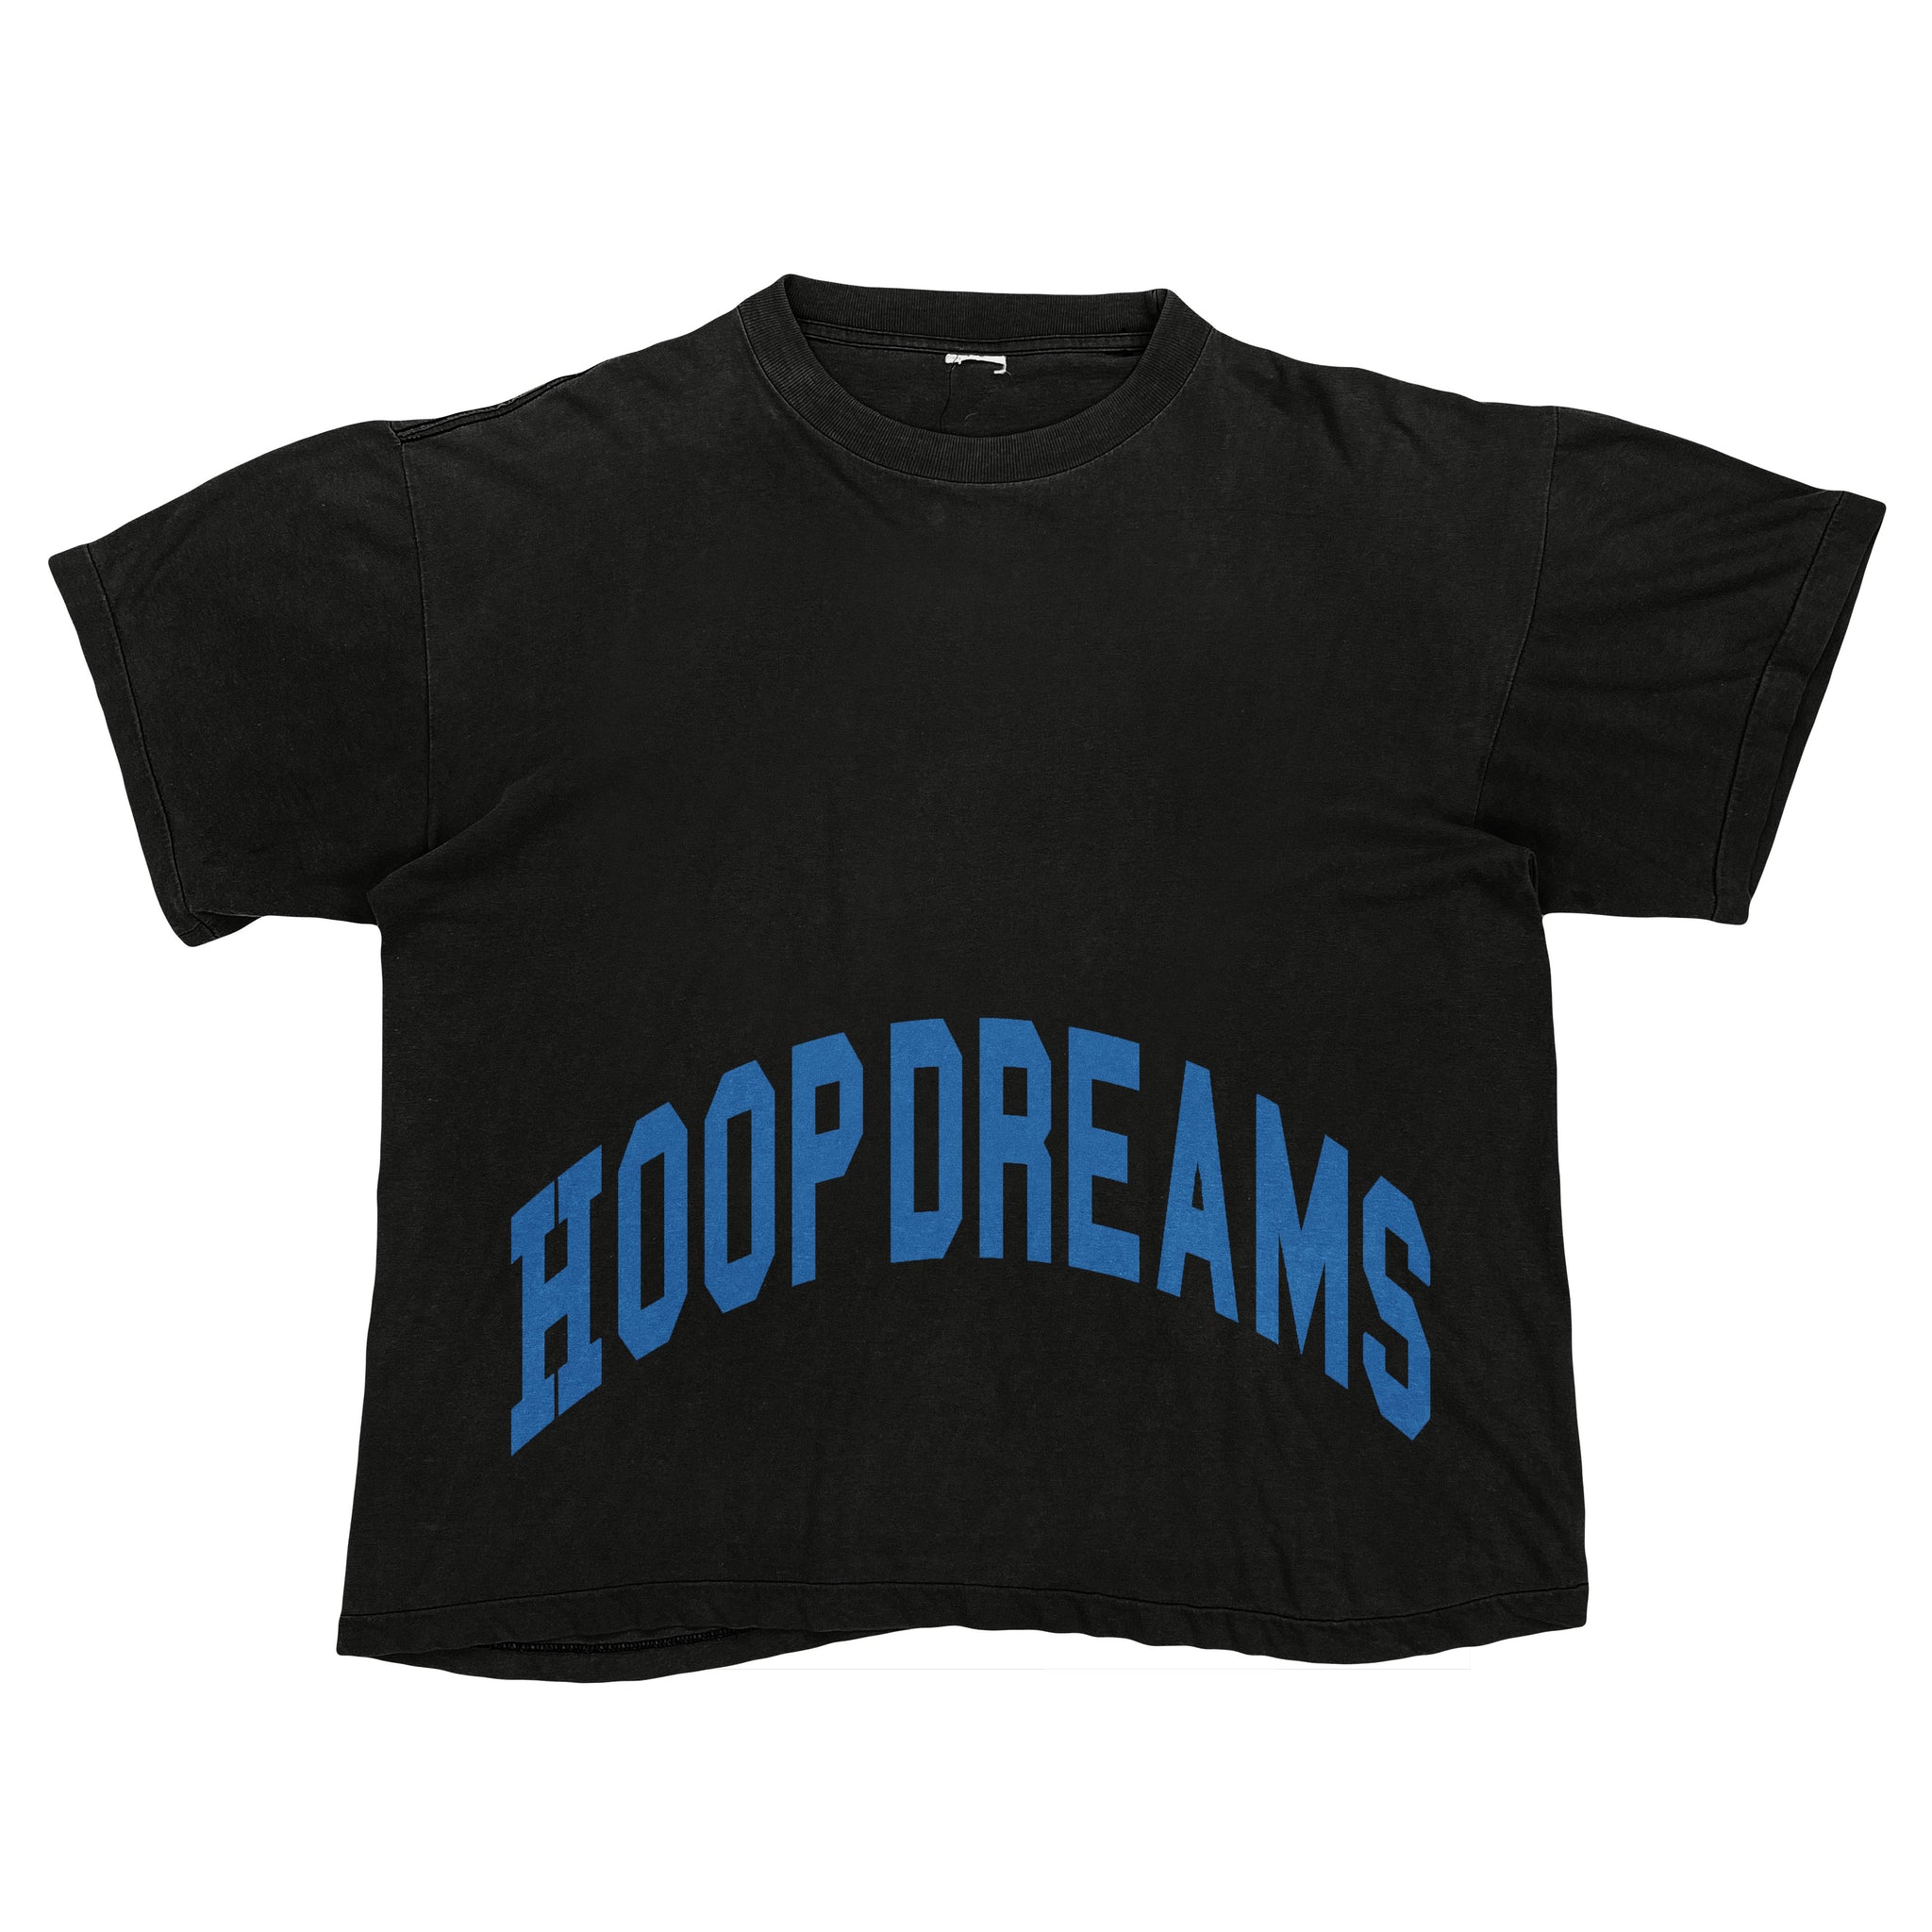 Hoop Dreams 2PAC Box T-shirt